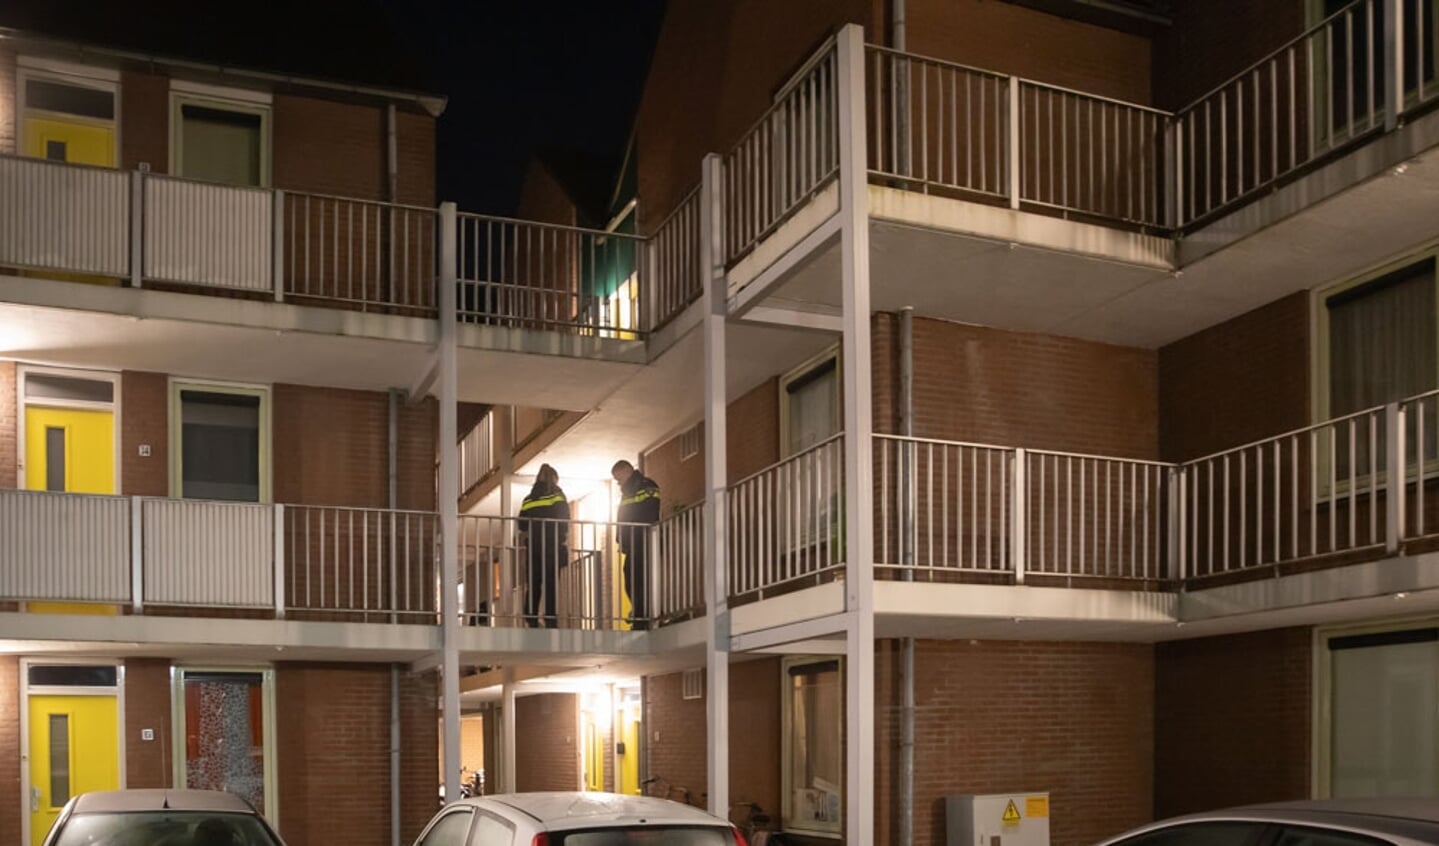 Nachtelijk forensisch onderzoek in woning in Baarn.
